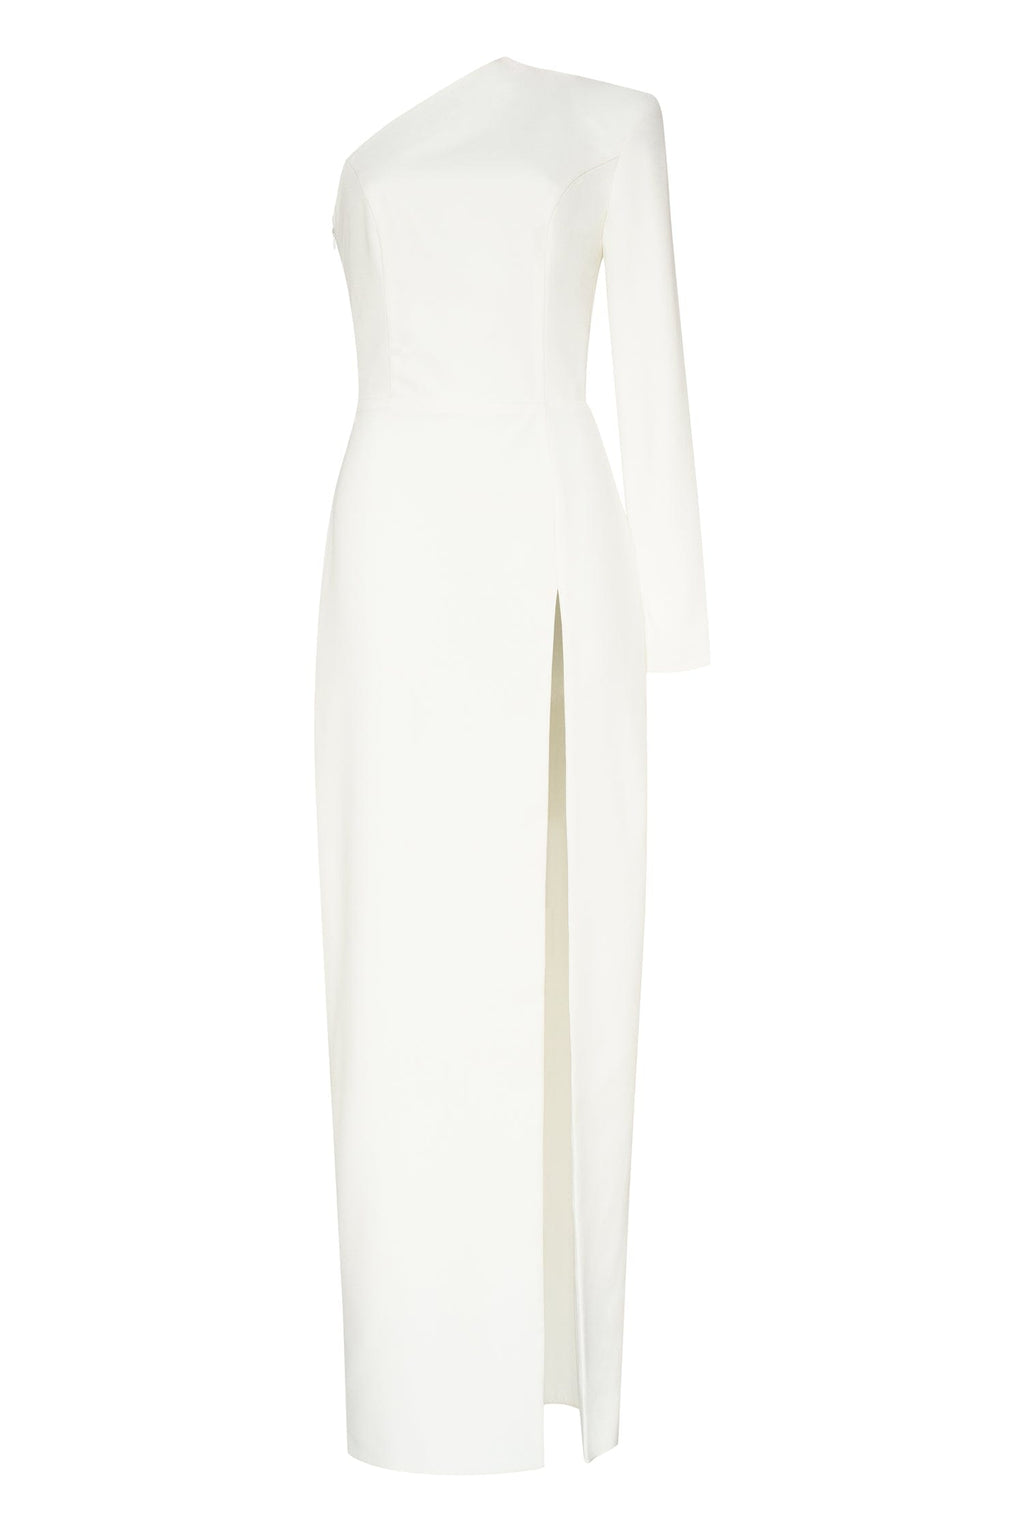 Amazon.com: YAXIU Women's Elegant White Plus Size 3/4 Sleeve Bride Tea  Length Vintage Lace Zipper Wedding Dresses : Clothing, Shoes & Jewelry